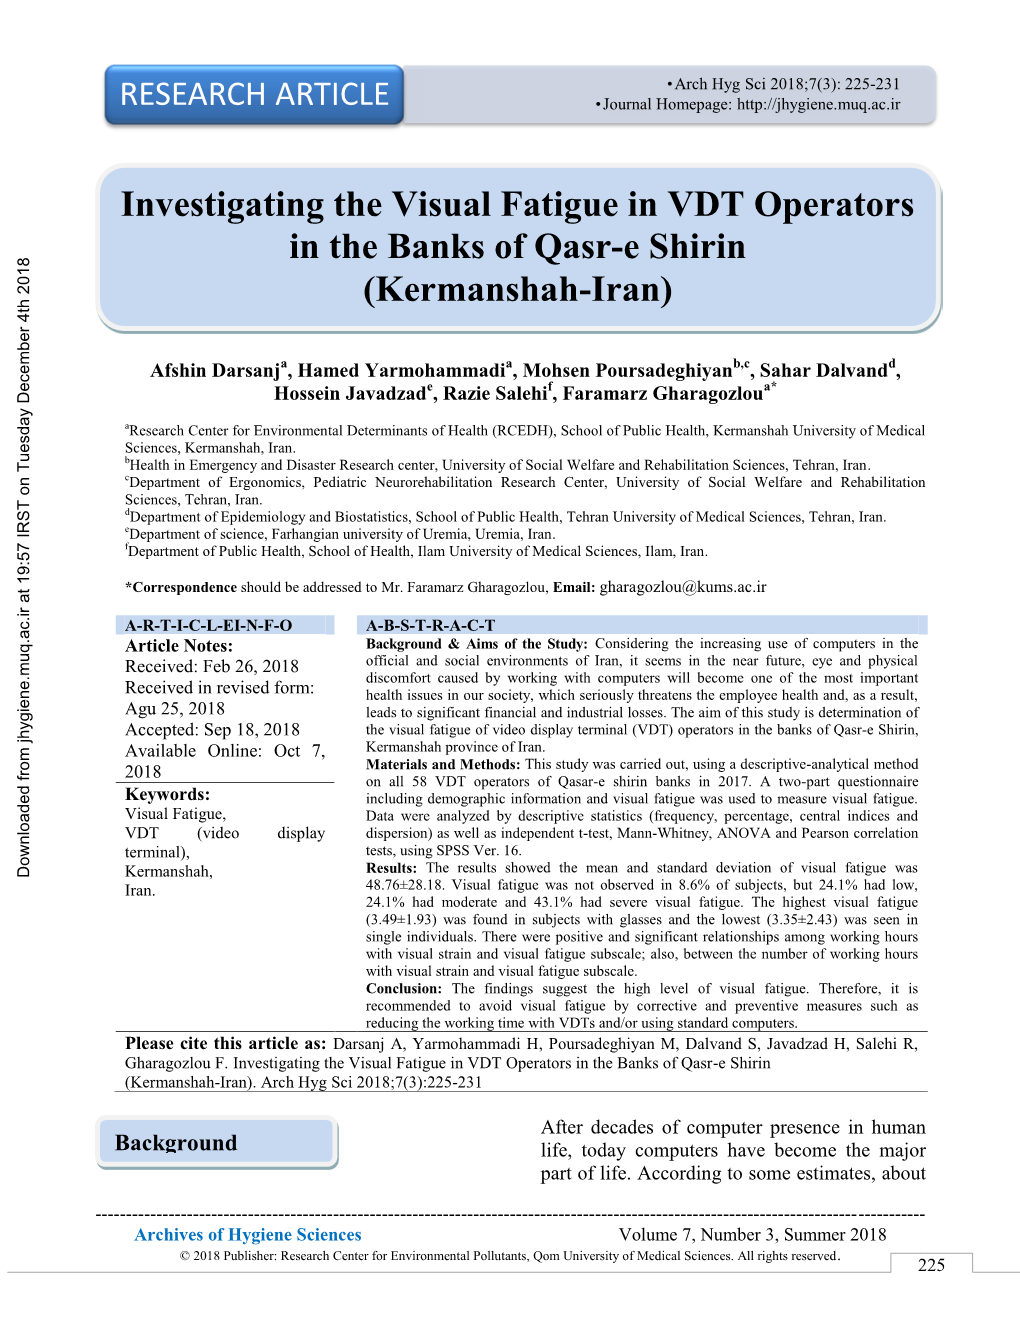 Investigating the Visual Fatigue in VDT Operators in the Banks of Qasr-E Shirin (Kermanshah-Iran)